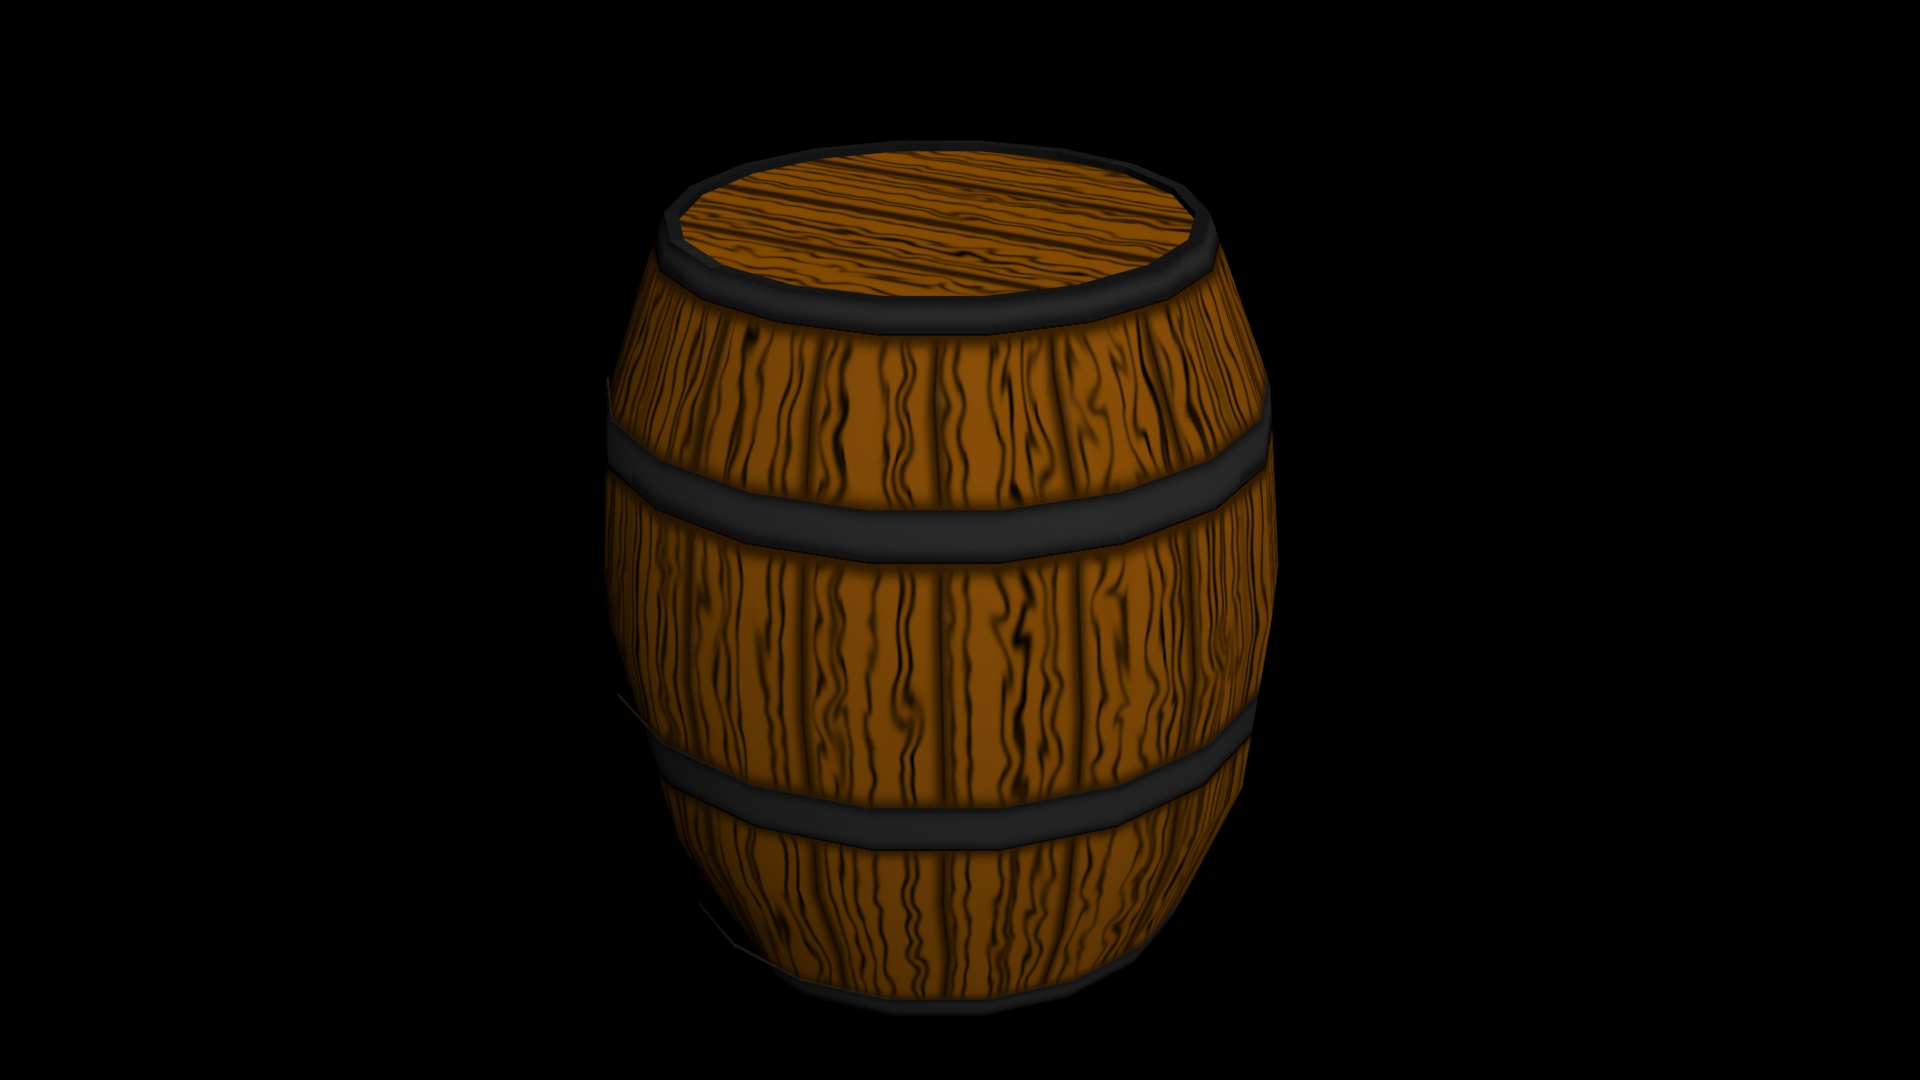 3D rendered barrel.